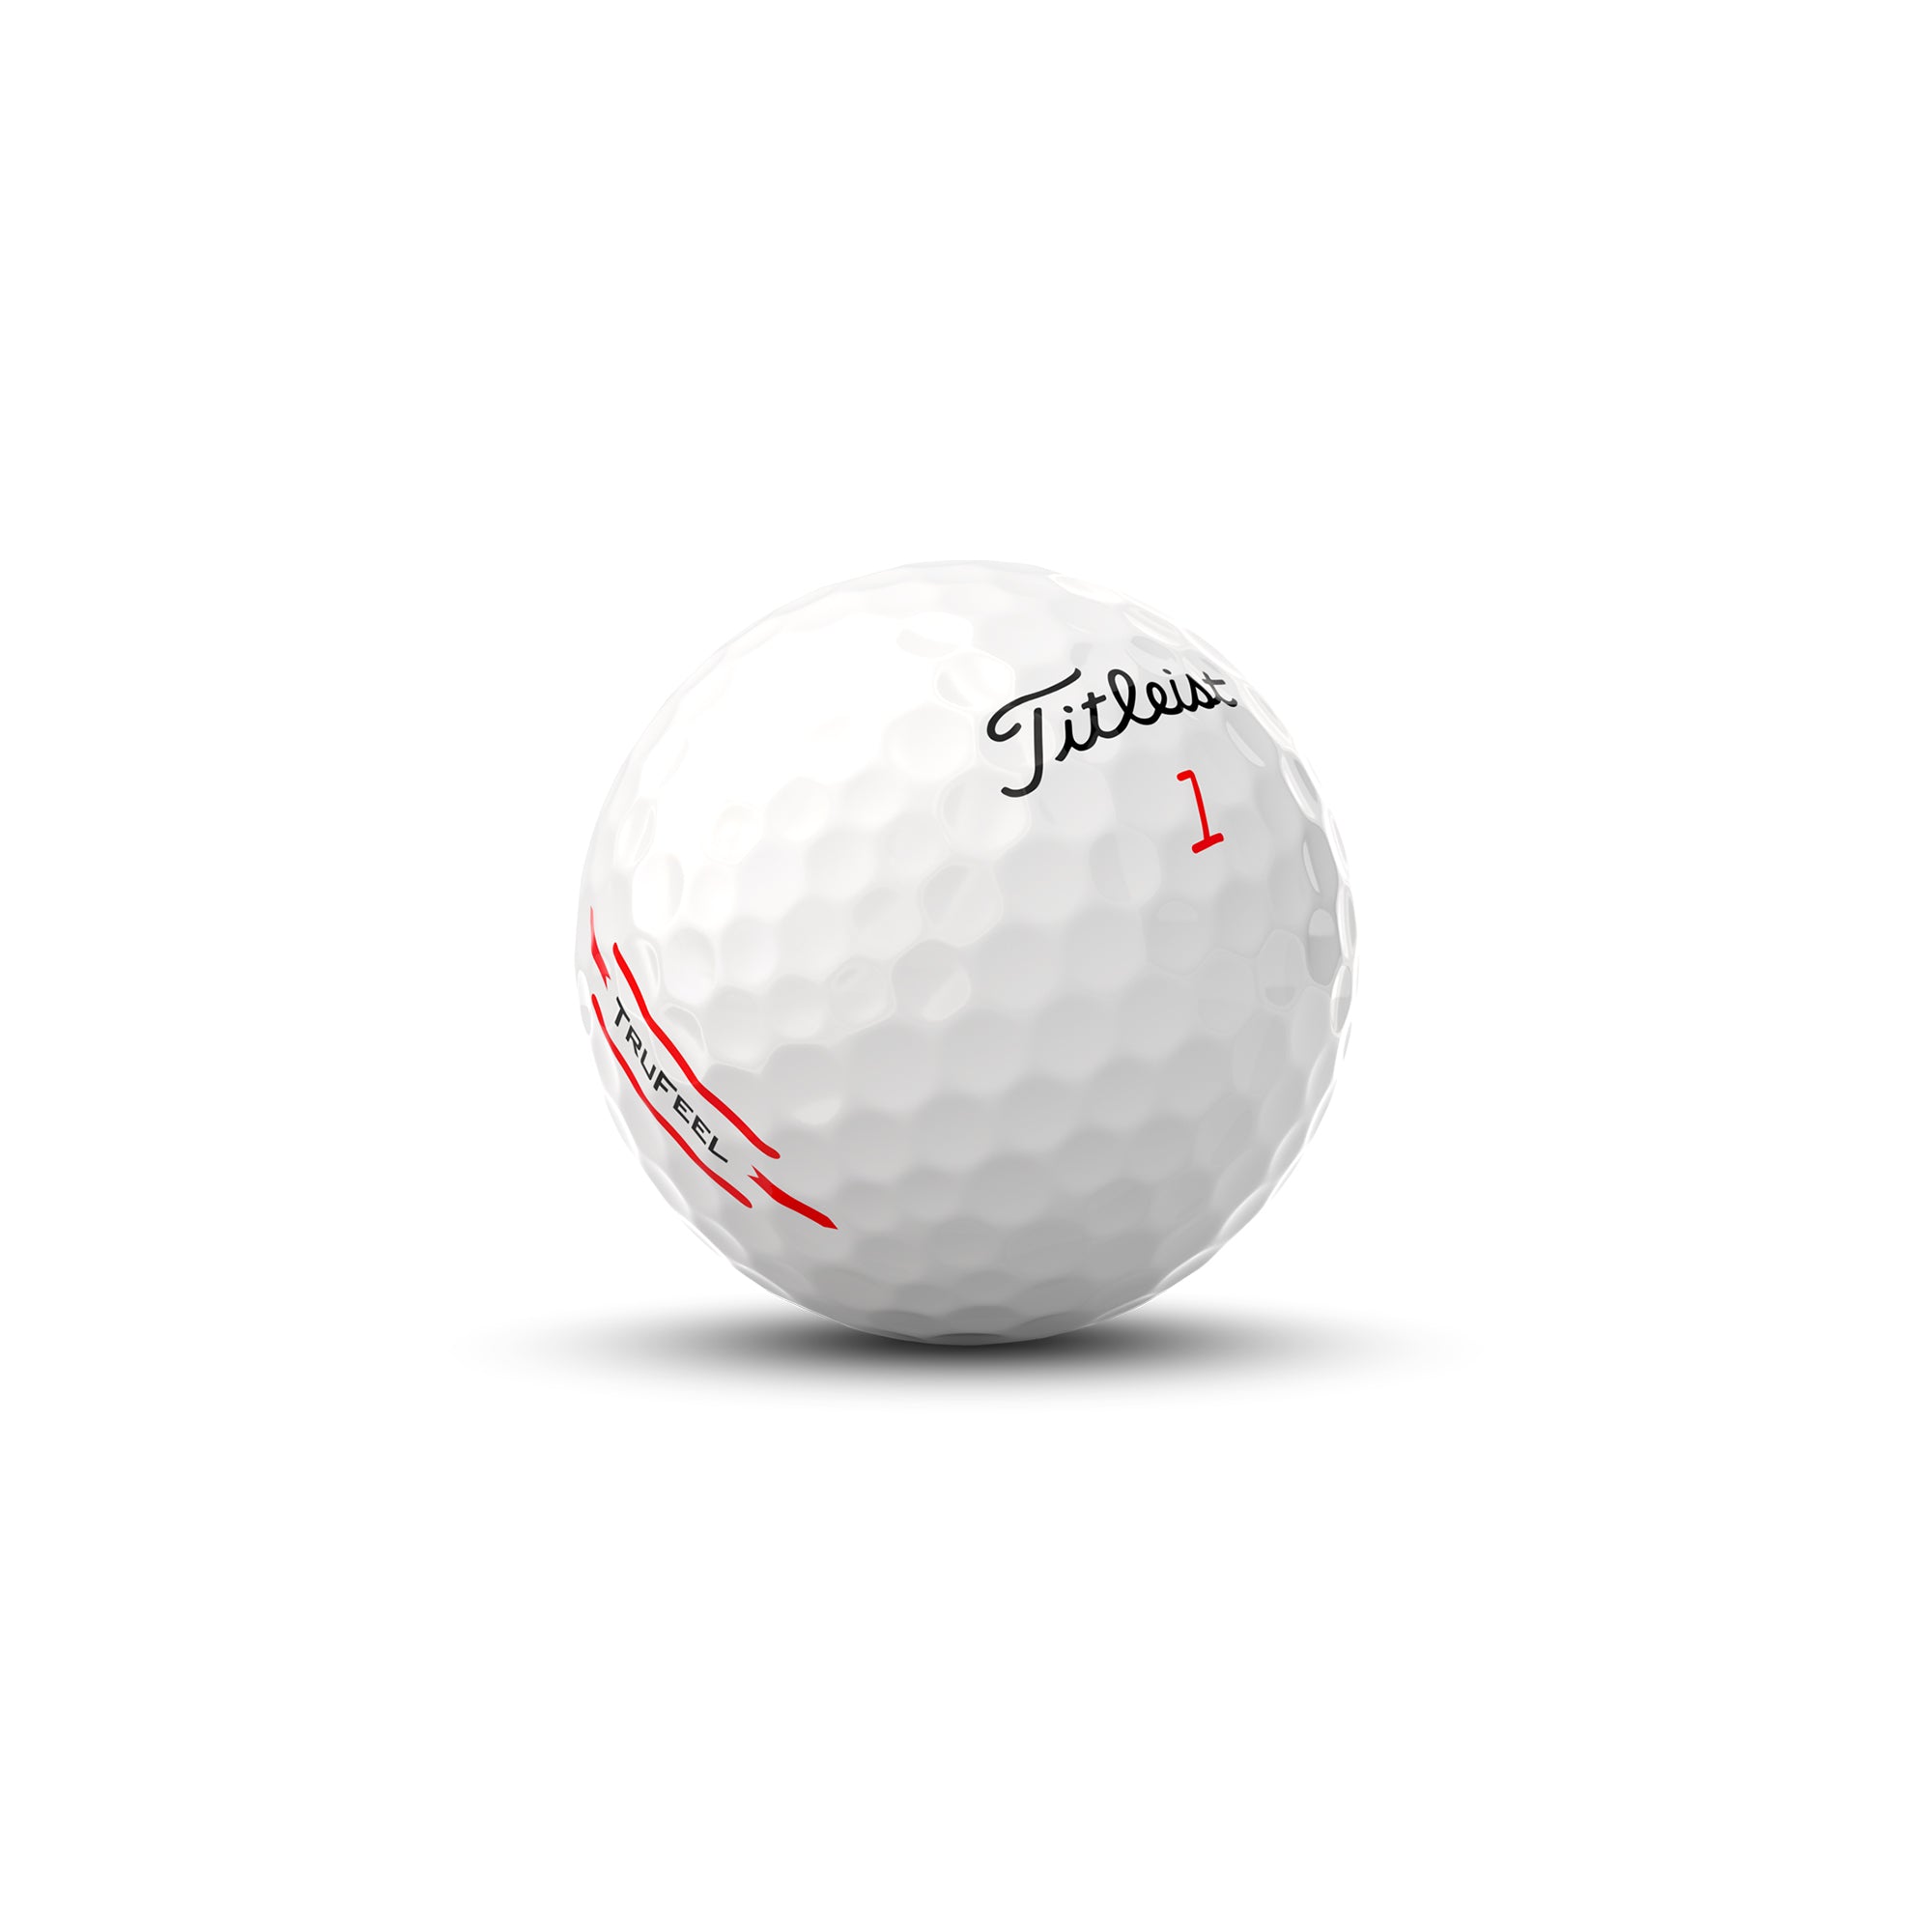 titleist-trufeel-2024-golf-balls-t6036s-white